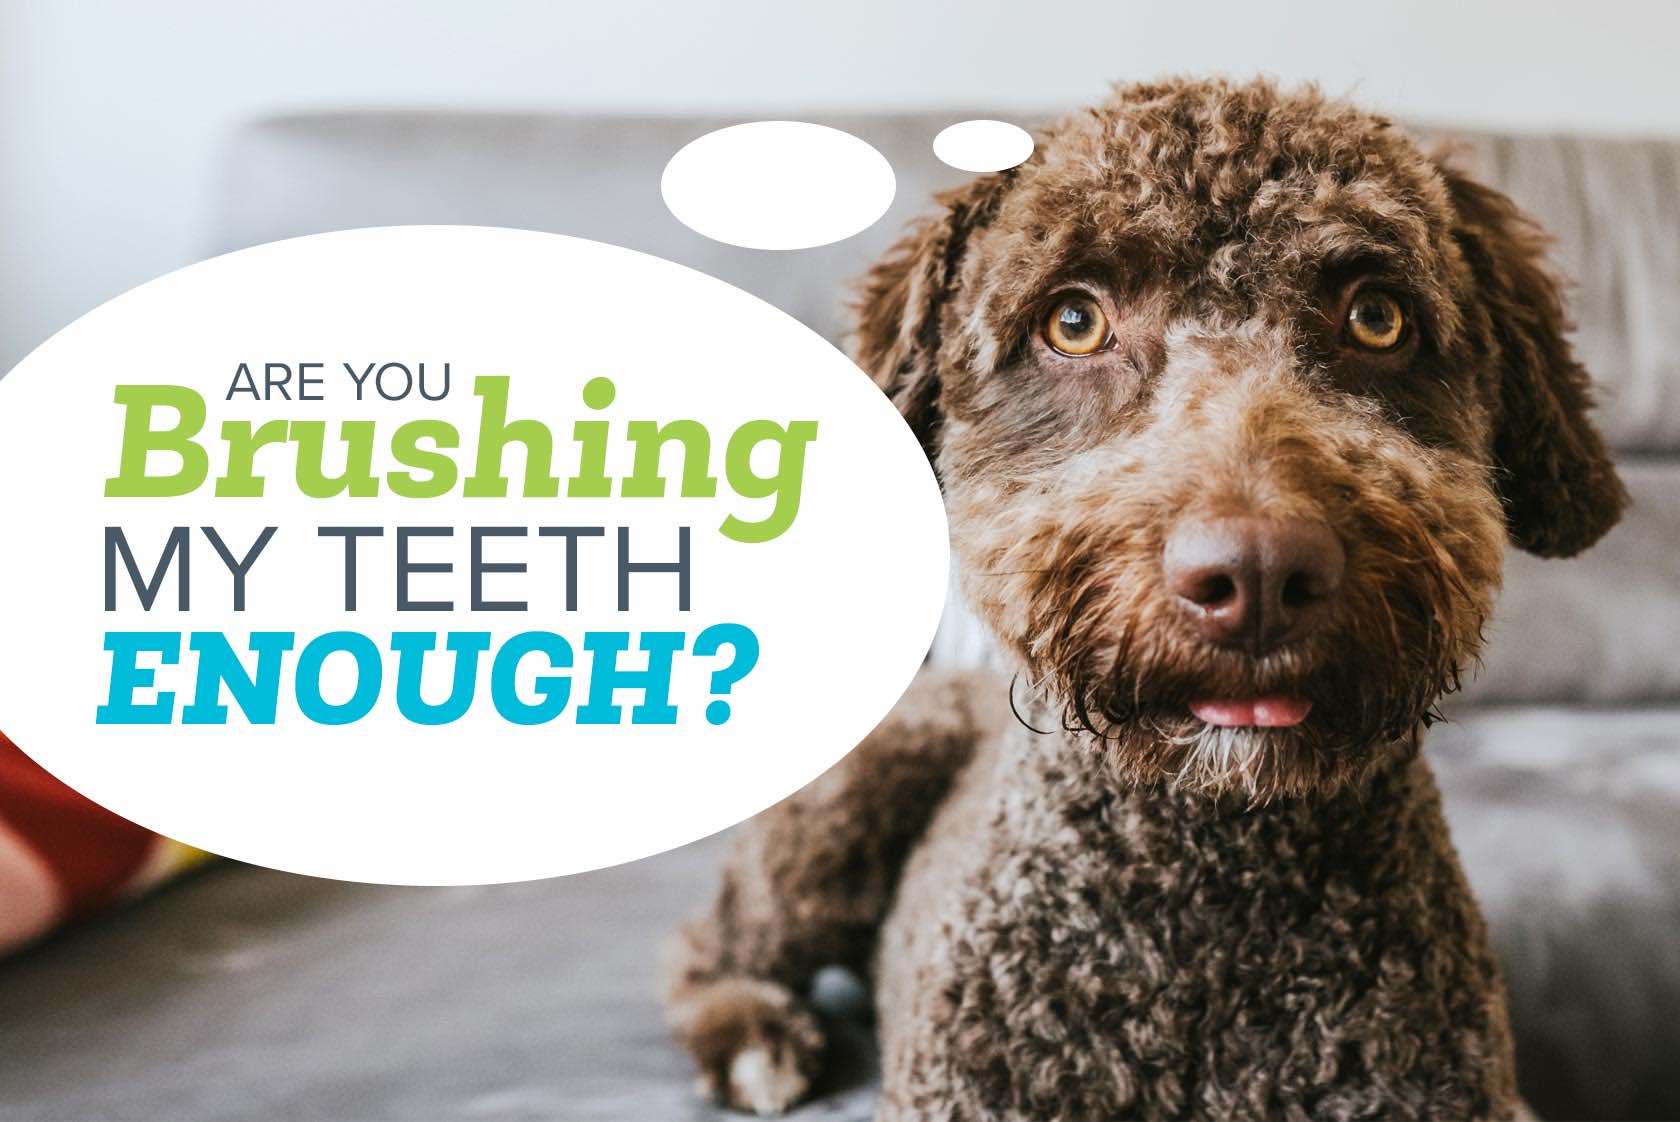 Oxyfresh - Are you brushing dog teeth enough